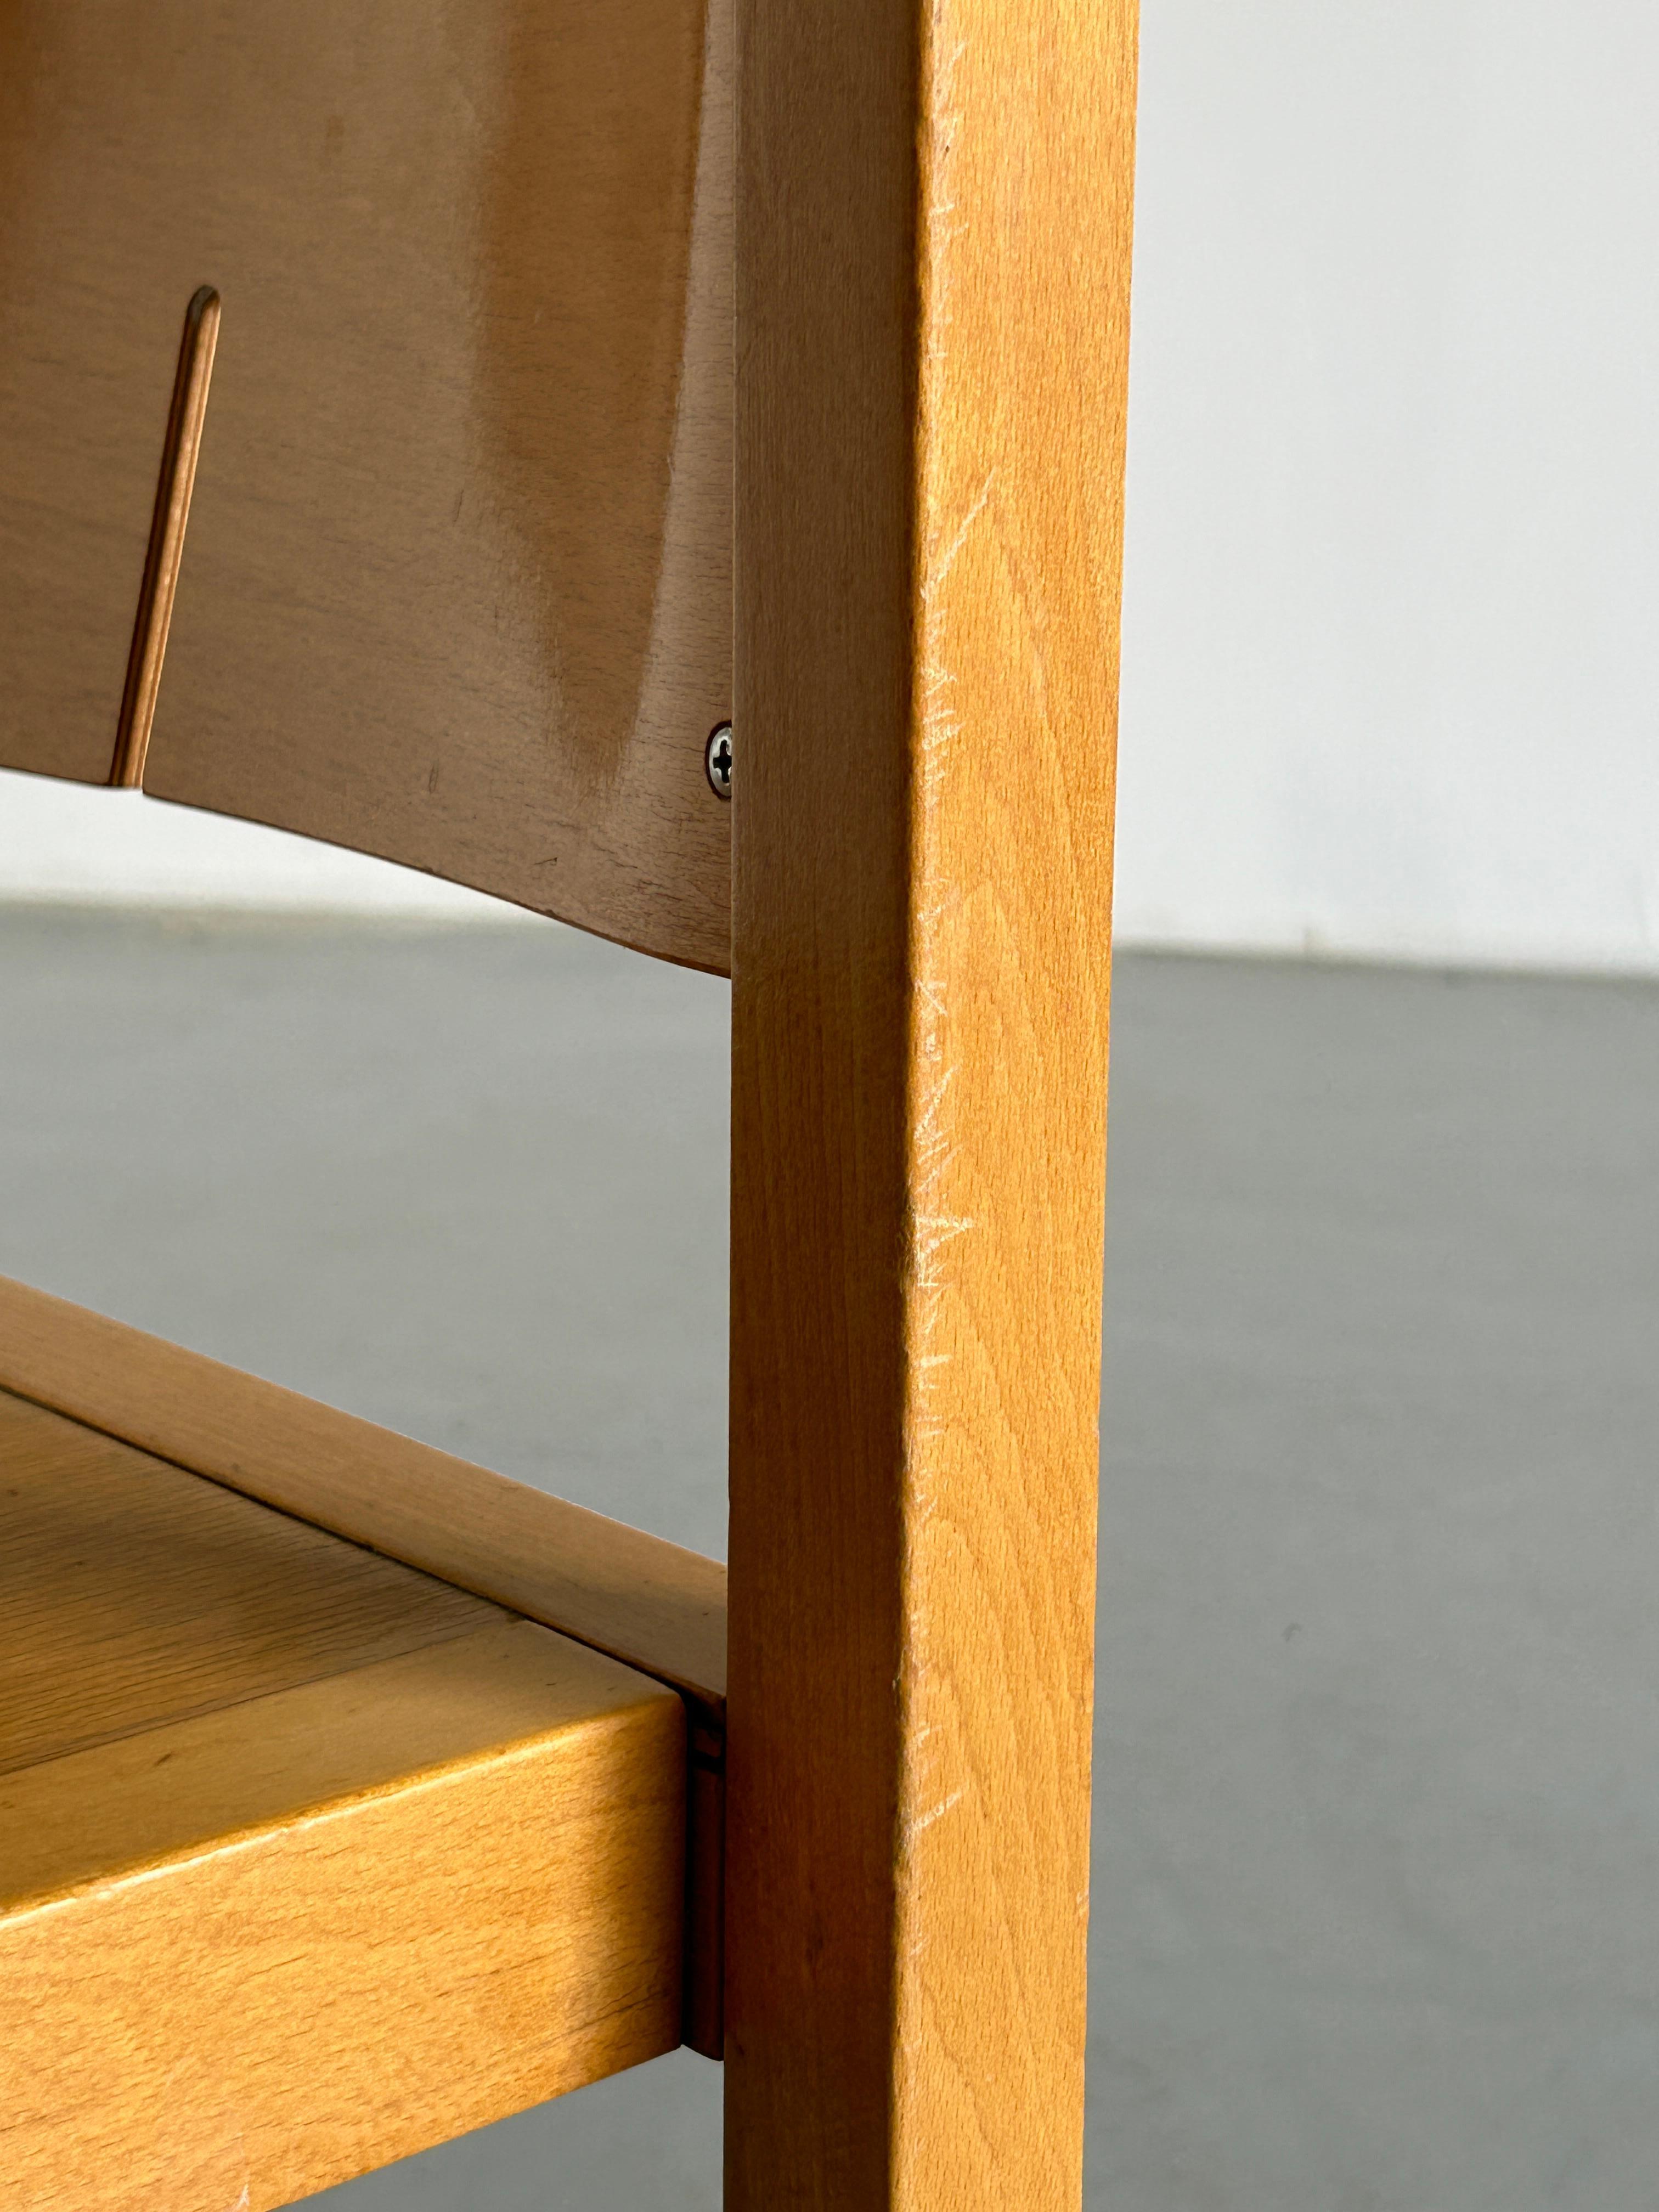 Thonet Postmodern Sculptural Wooden Chair, 1990s Austria For Sale 11